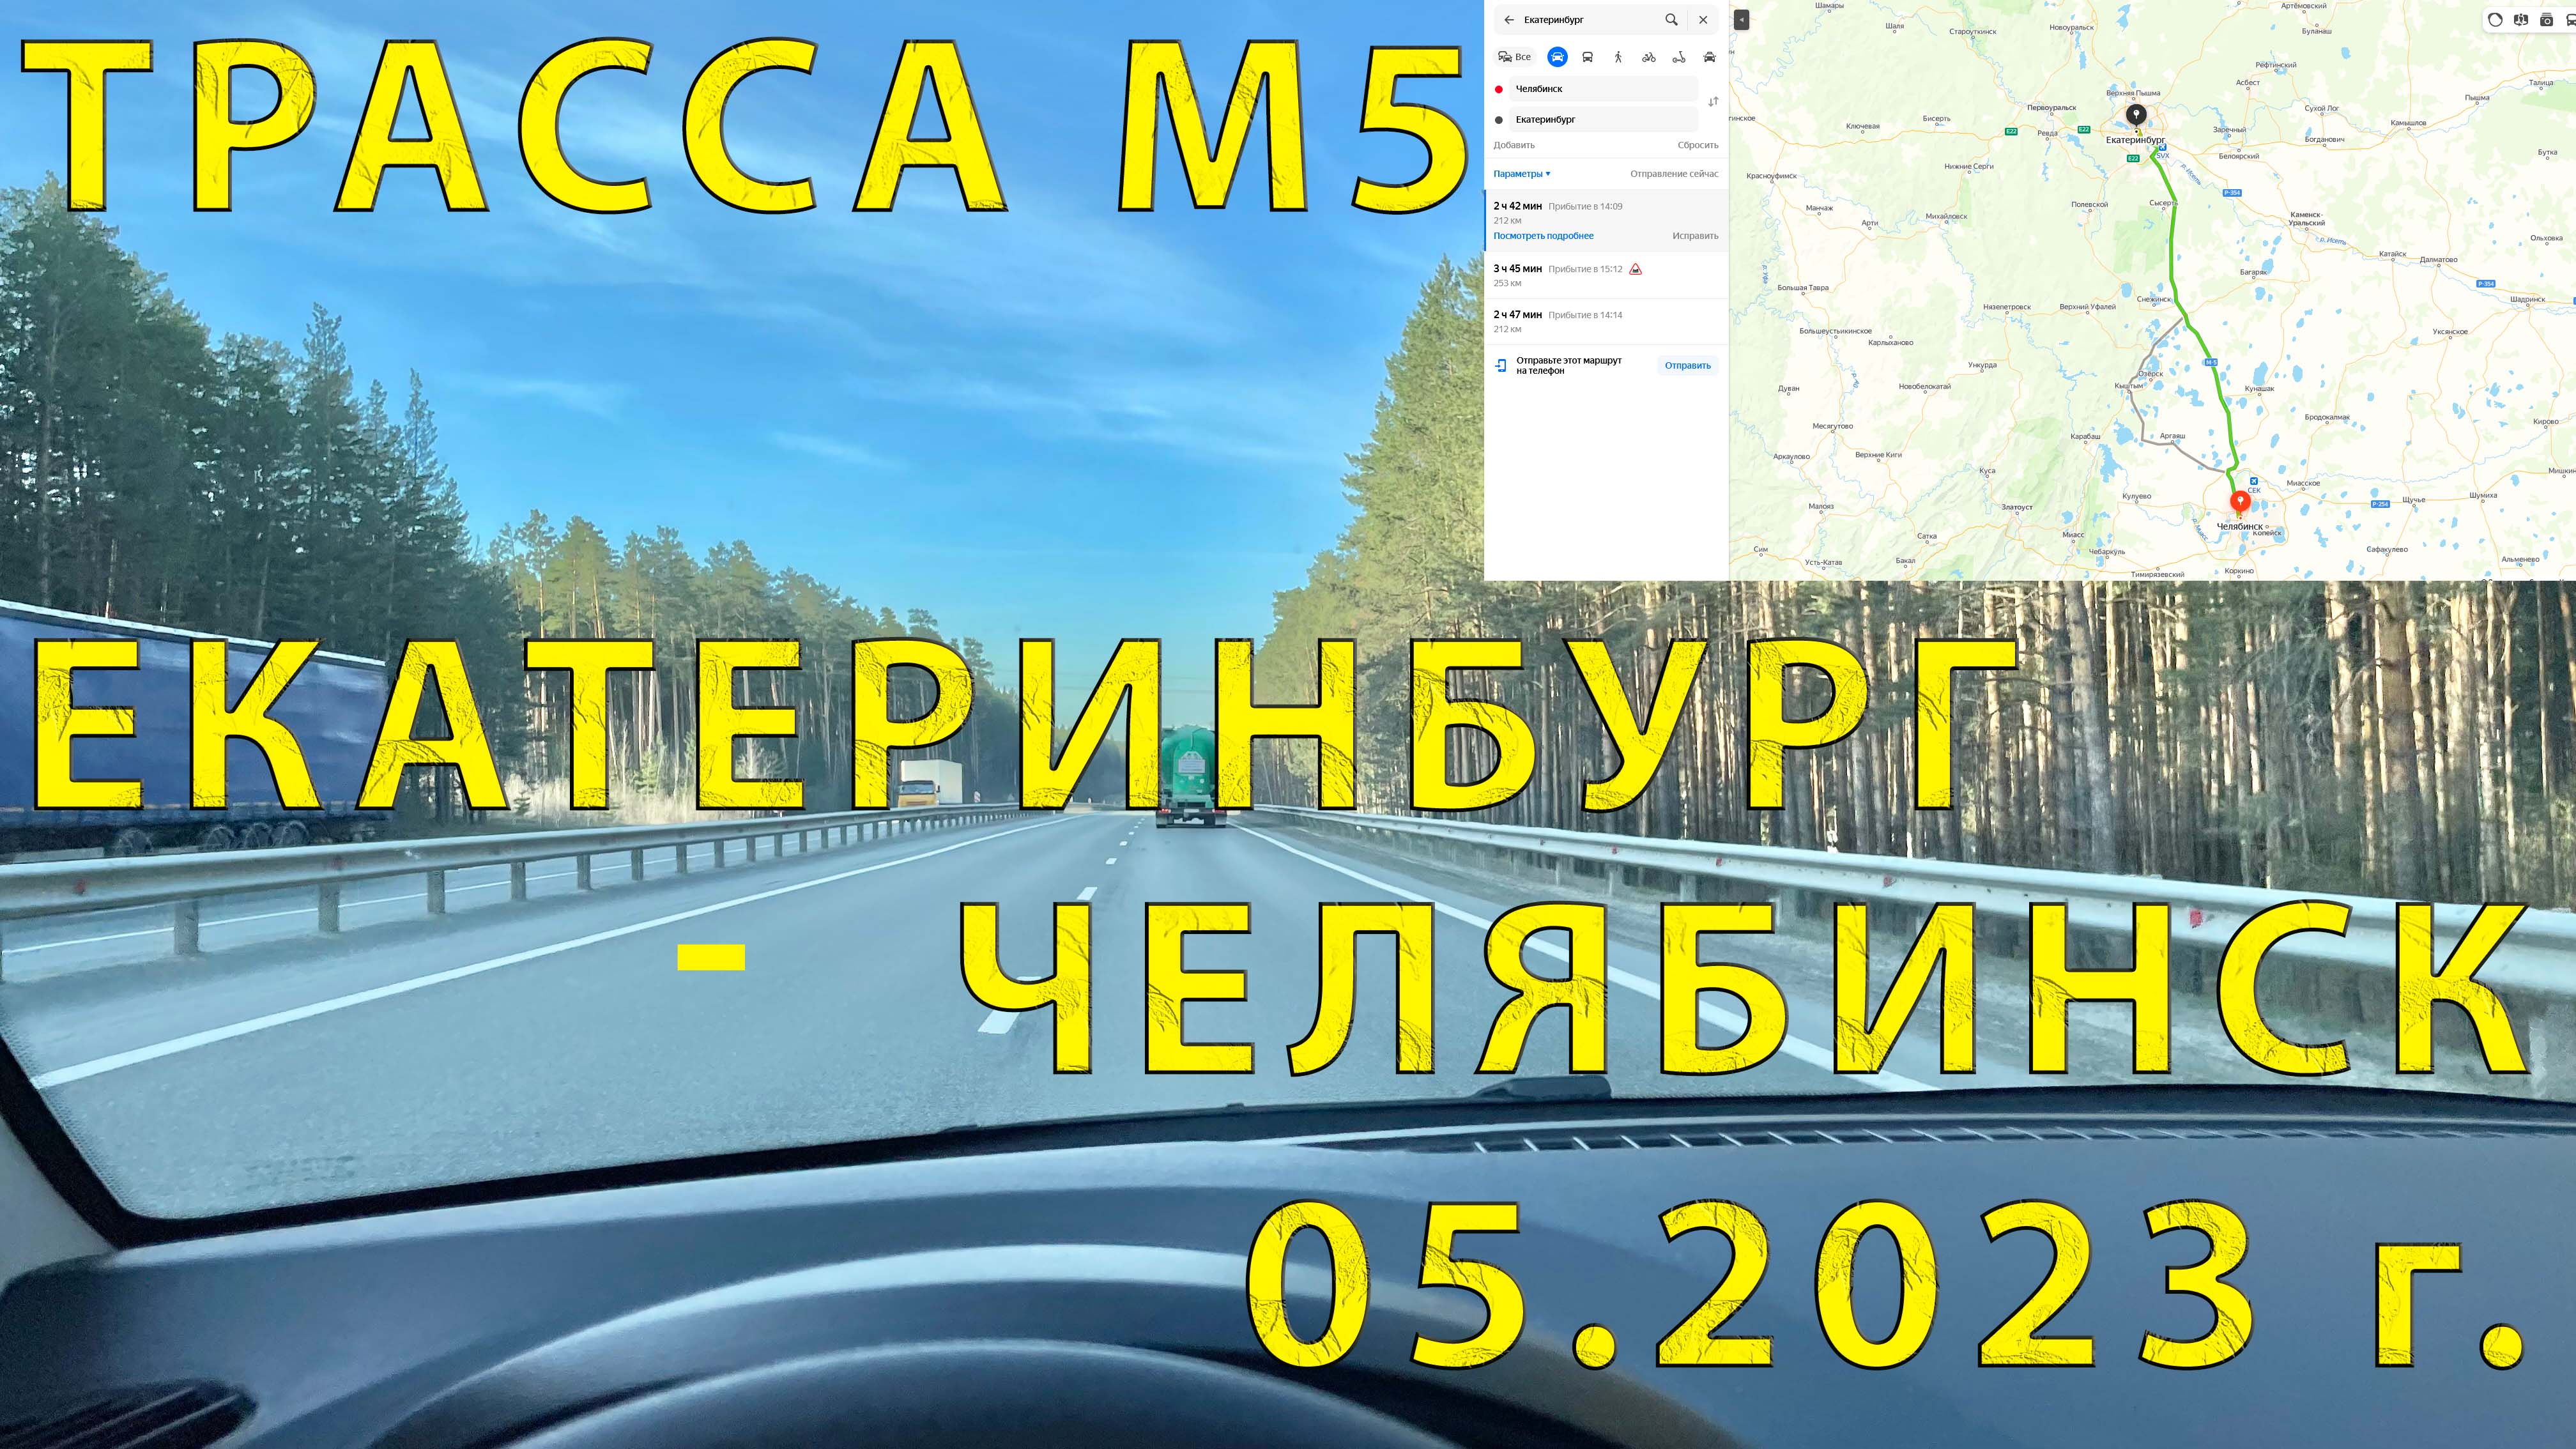 Участок автодороги Екатеринбург - Челябинск (трасса М5) 05.2023 г.